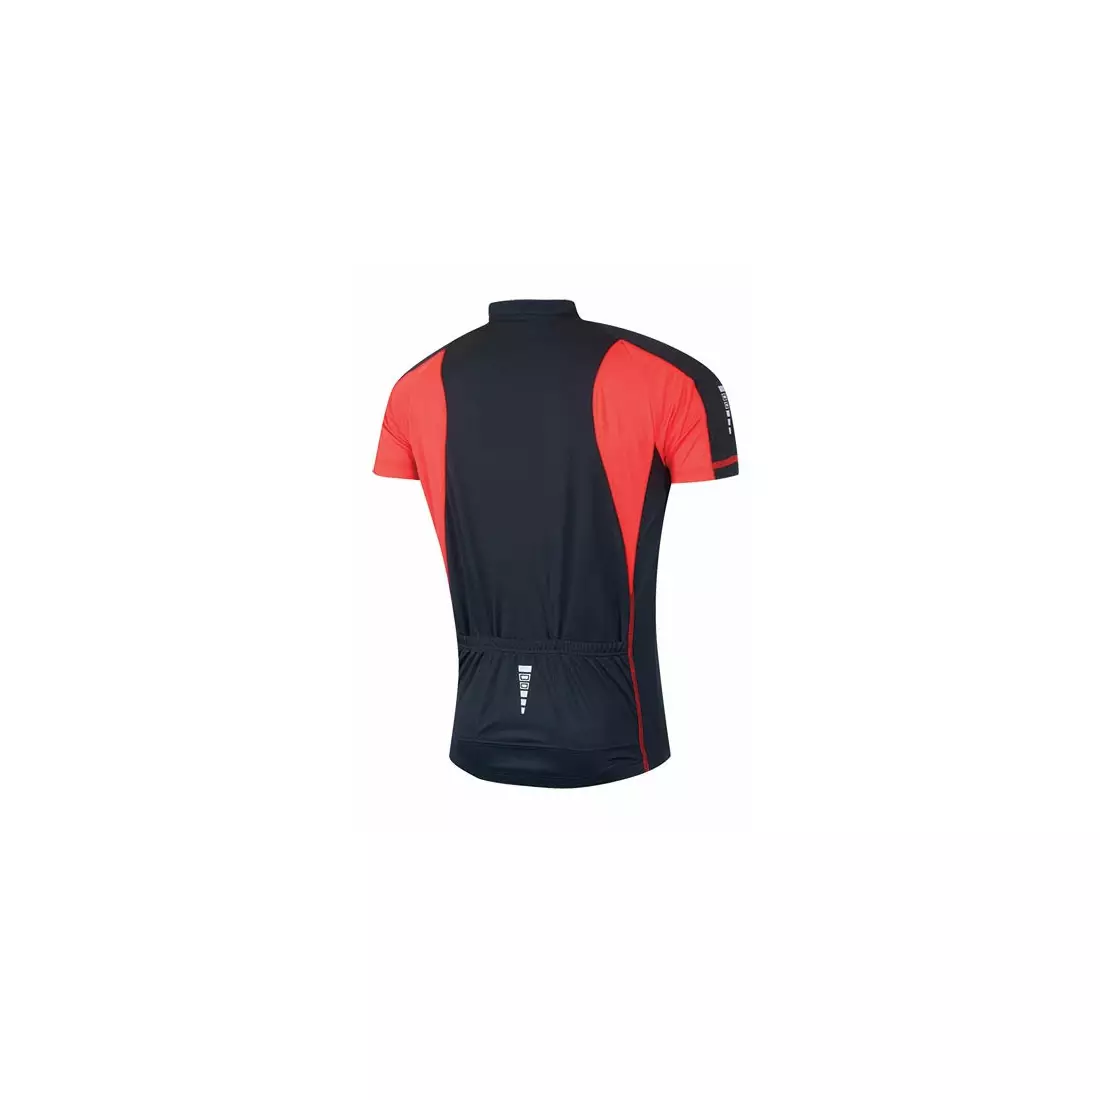 FORCE T10 cyklistický dres, čierny a červený 900102